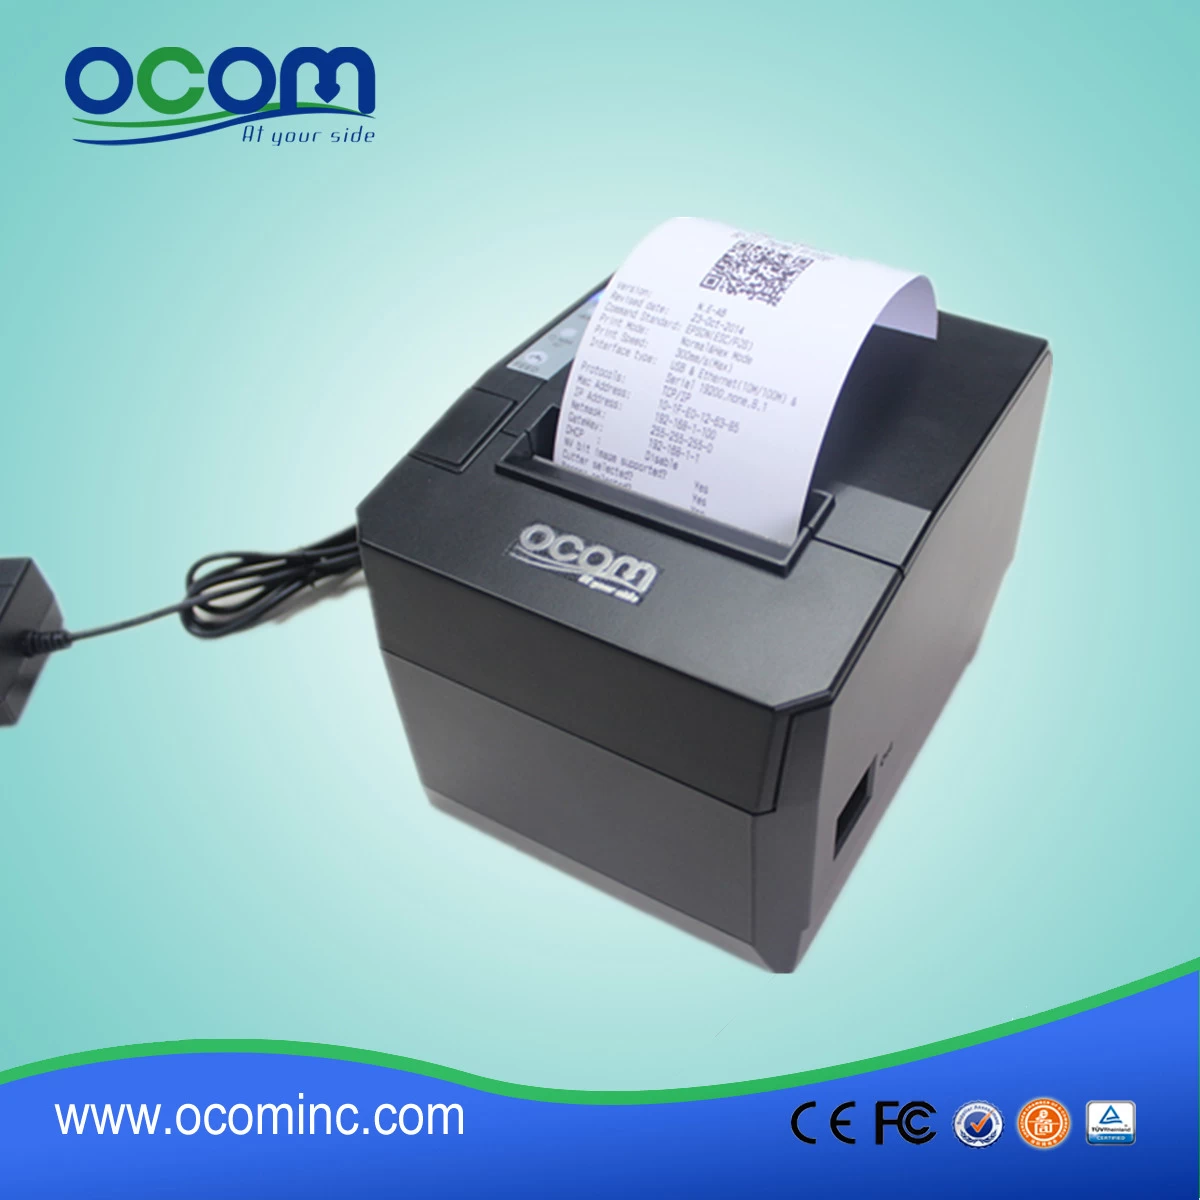 Newest desigh 80mm thermal receipt printer-OCPP-88A